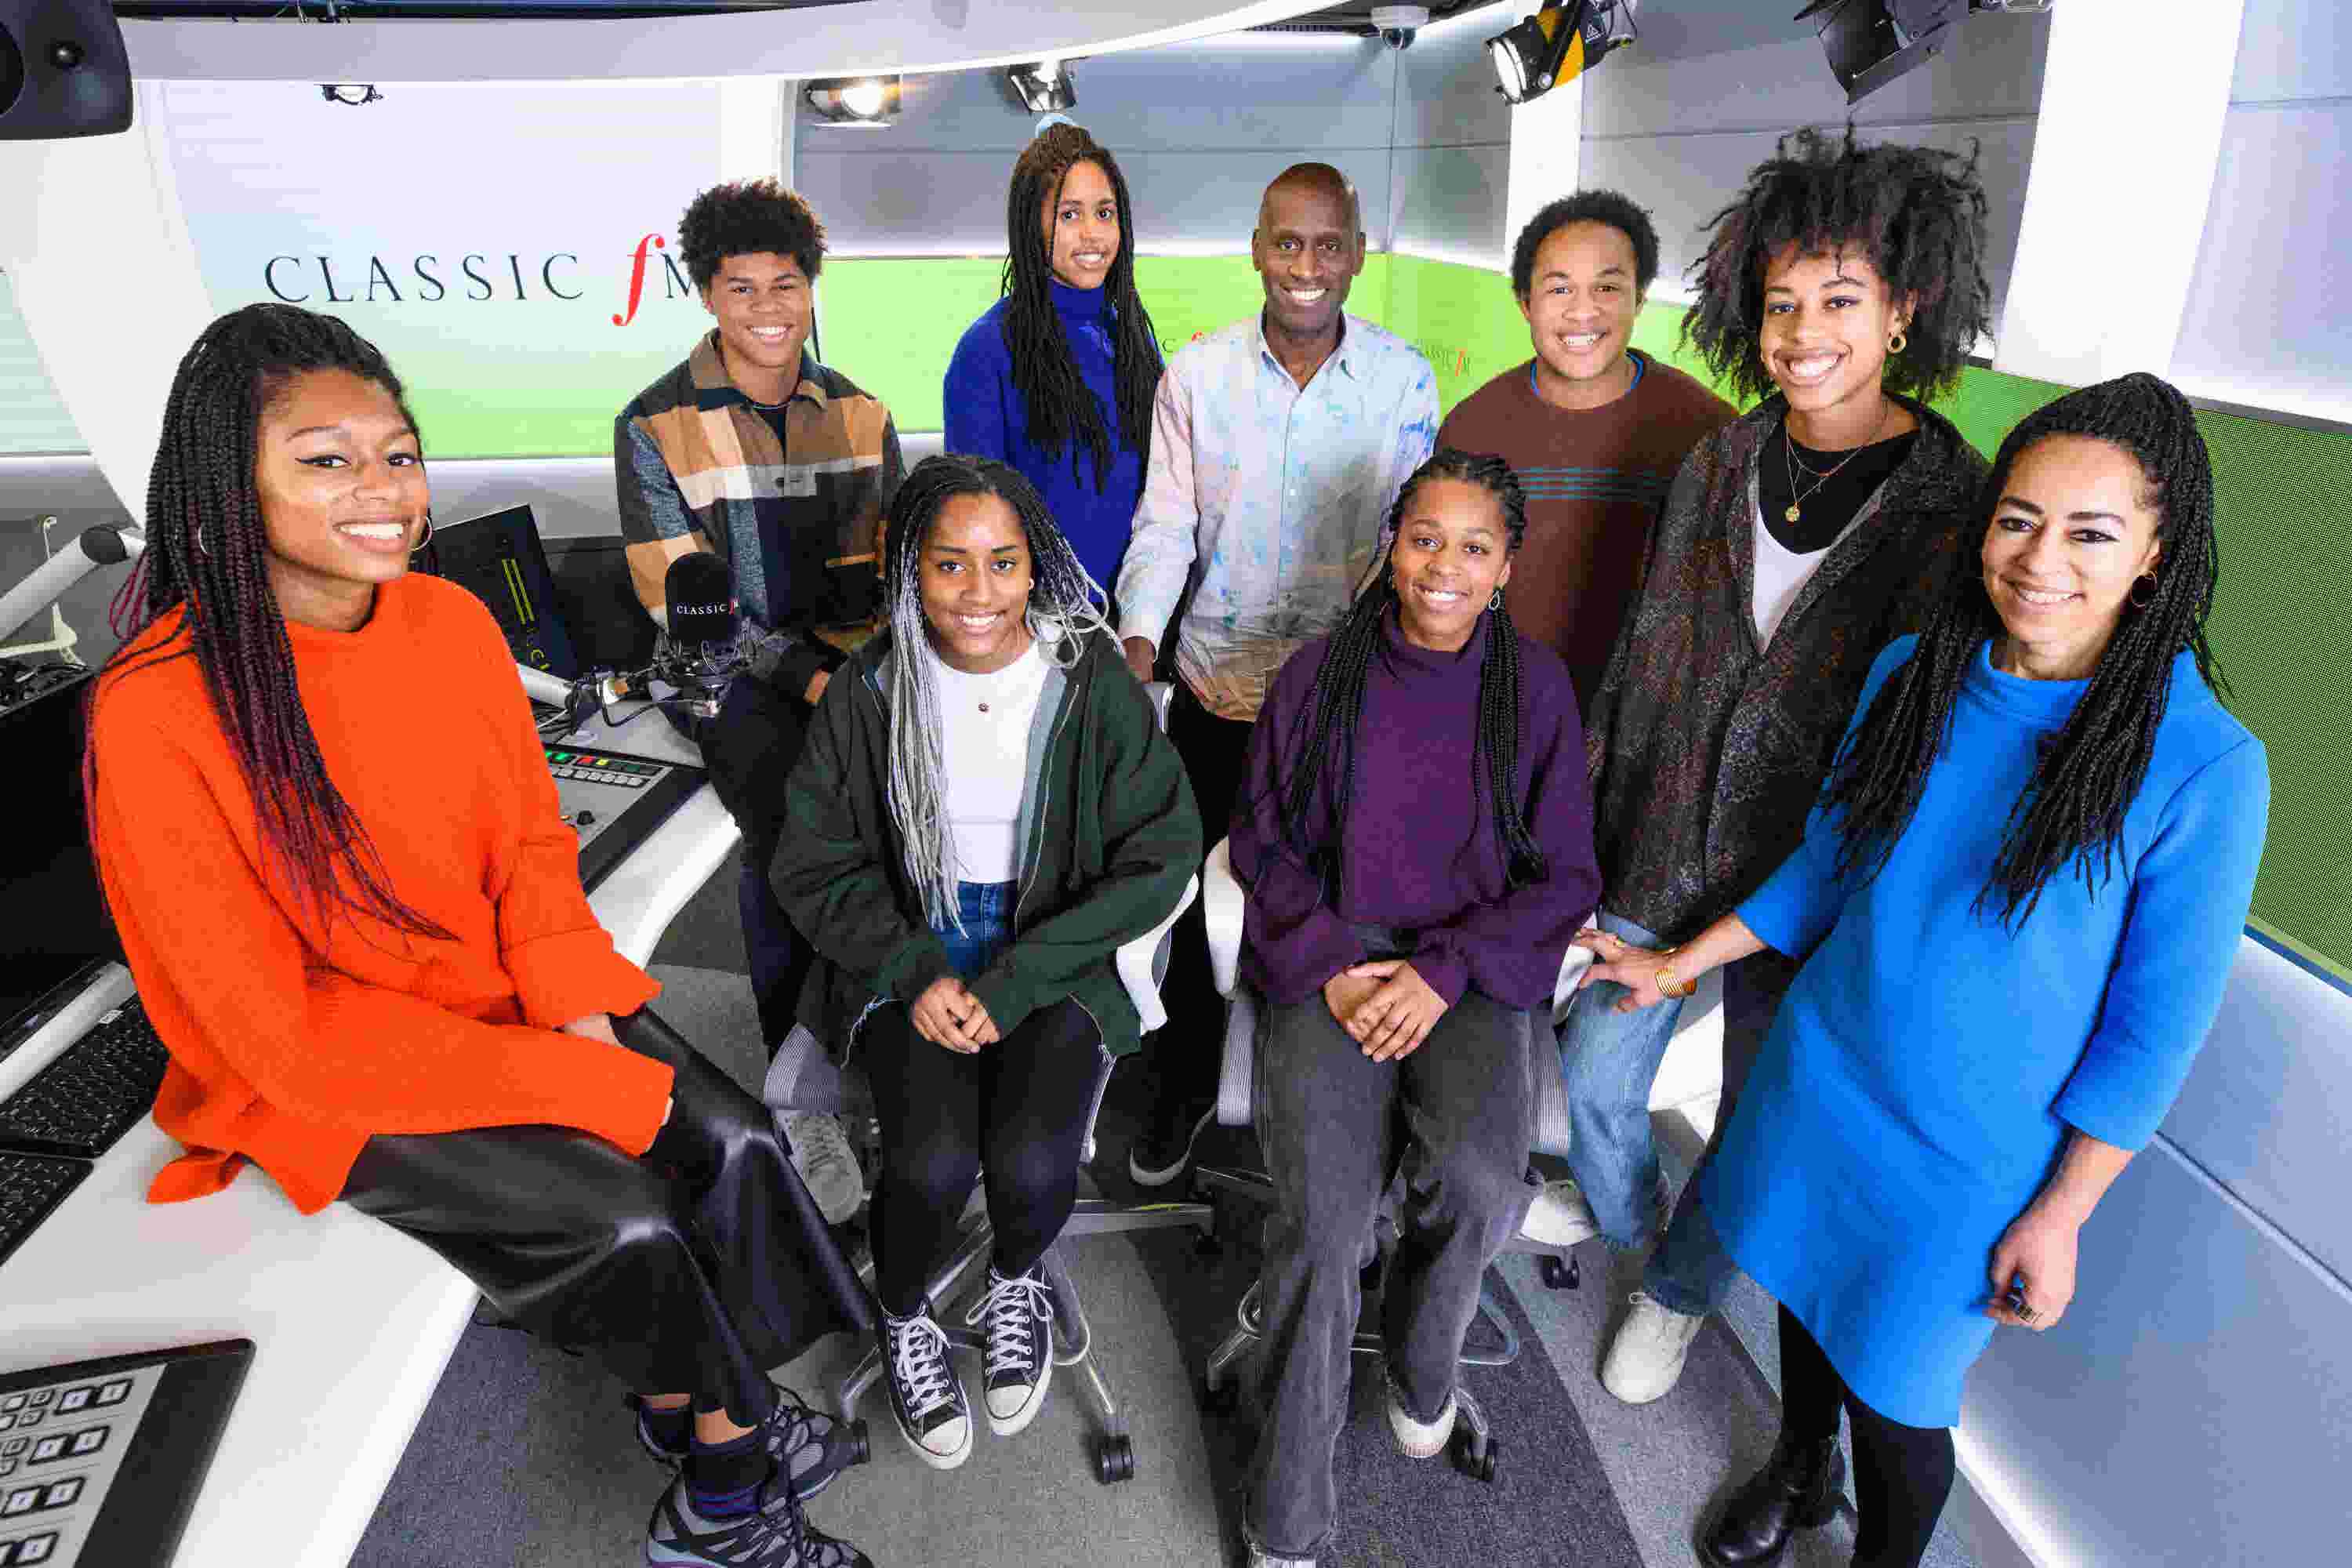 Musical superstar family the Kanneh-Masons launched a Classic FM radio series last year : Kadiatu, Stuart, Isata, Braimah, Sheku, Konya, Jeneba, Aminata and Mariatu